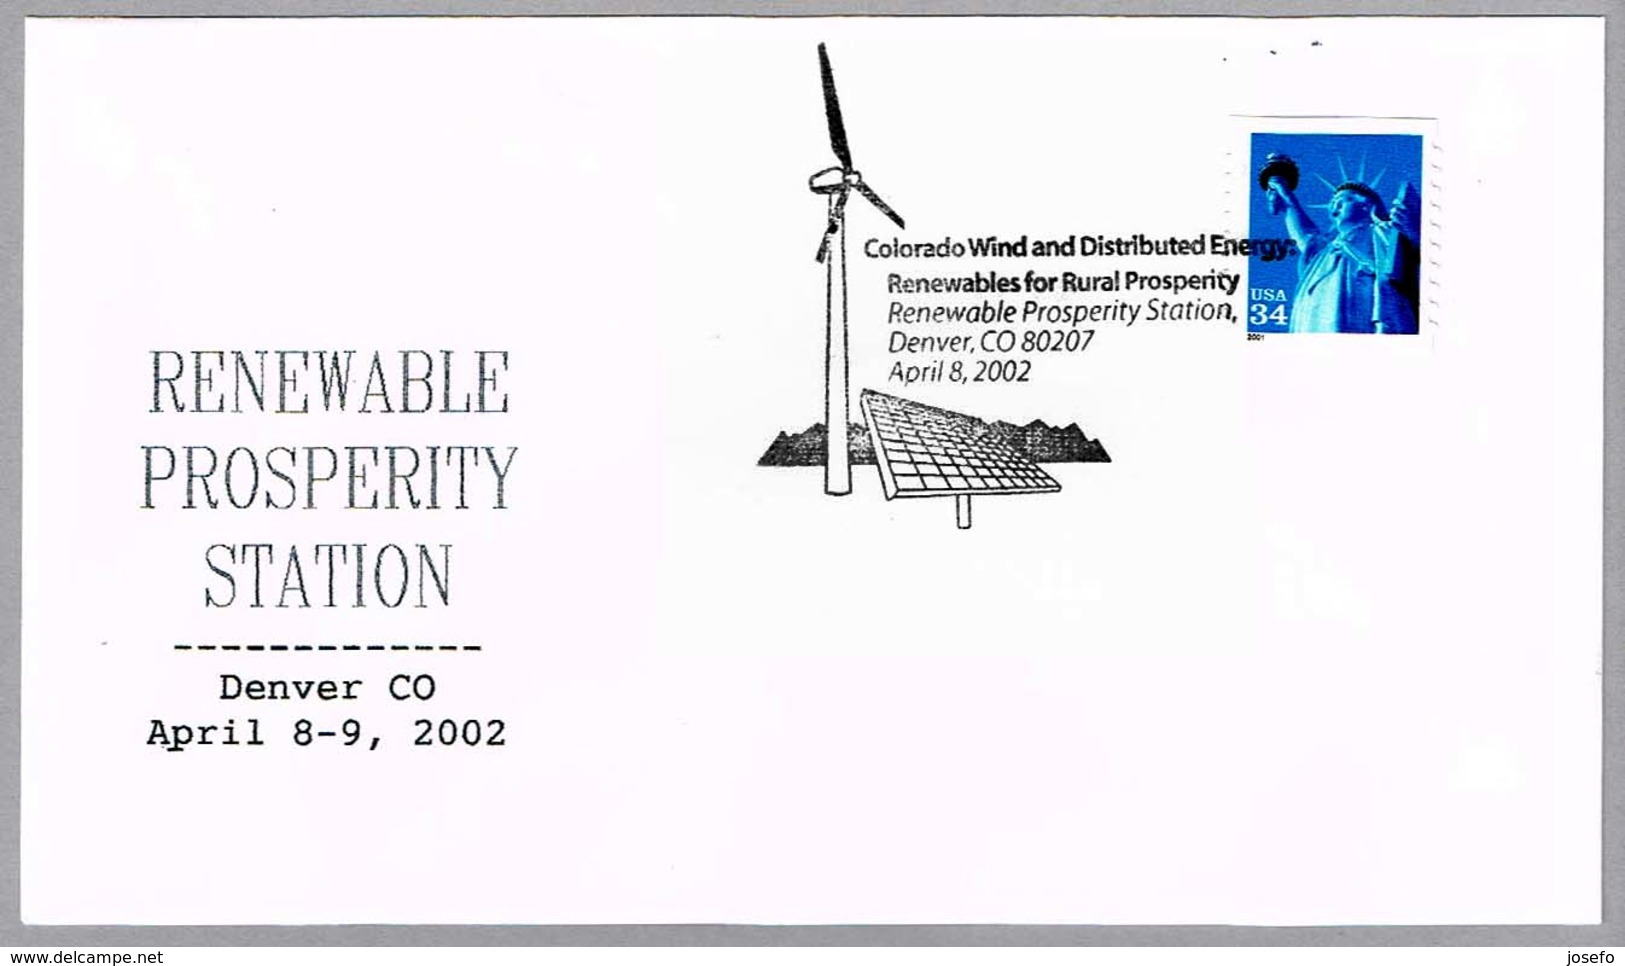 RENEWABLES ENERGIES FOR RURAL PROSPERITY. Energias Renovables. Denver CO. 2002 - Environment & Climate Protection